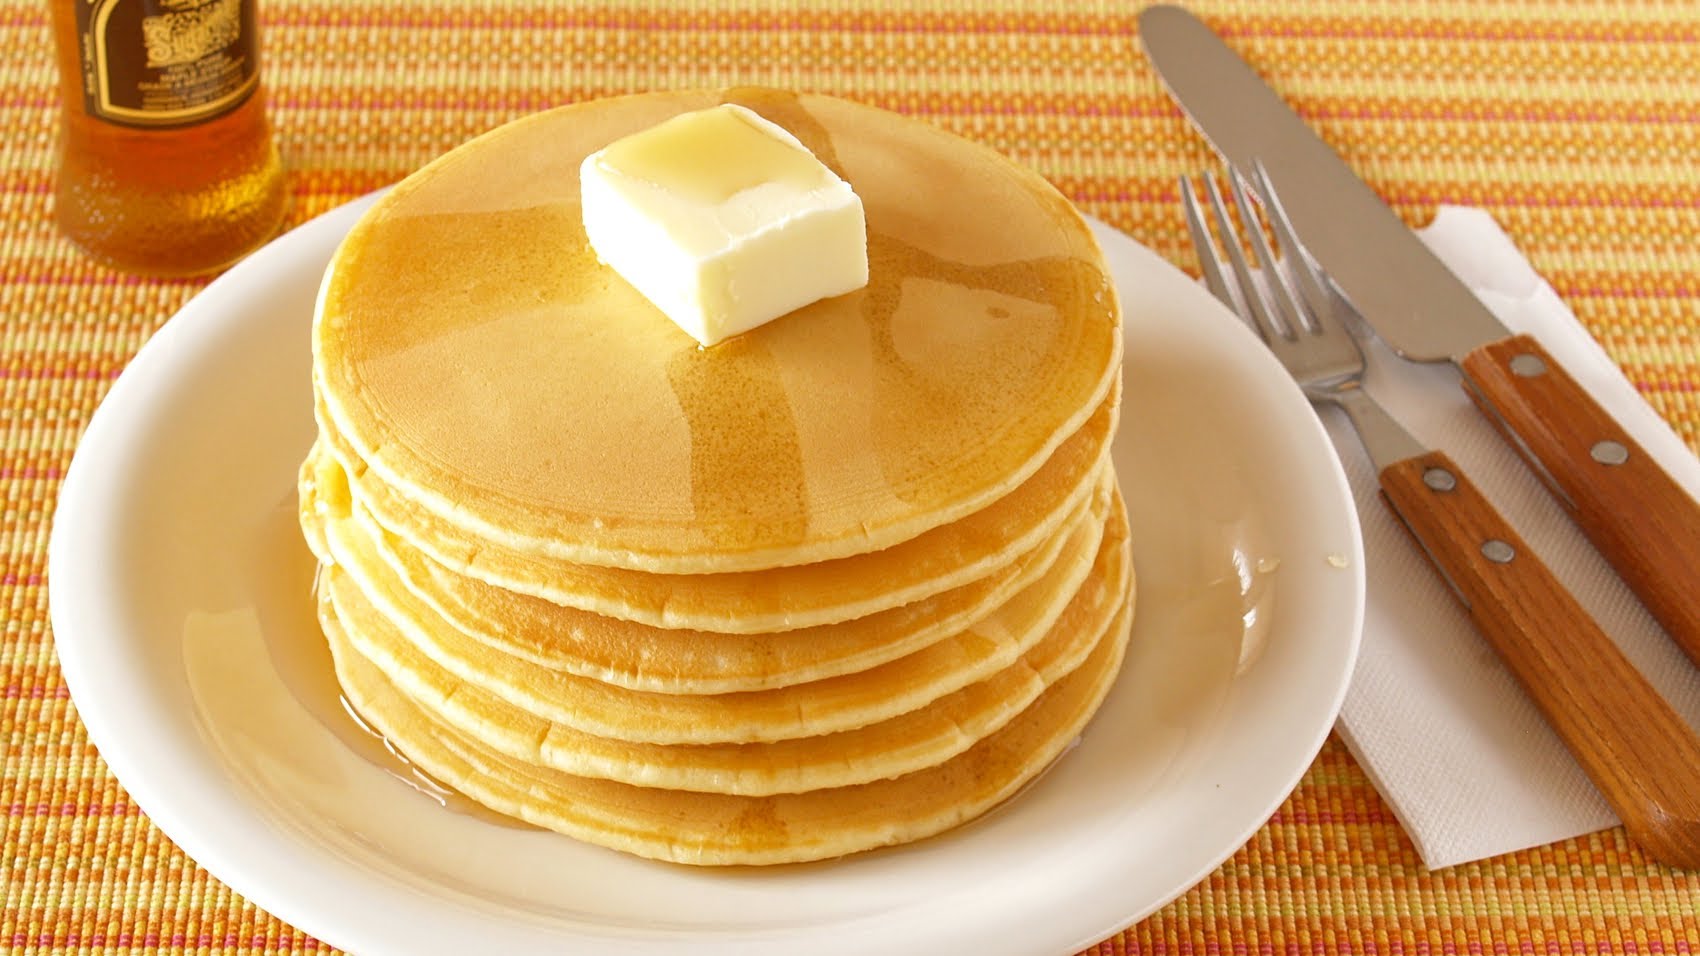 How to make Pancakes